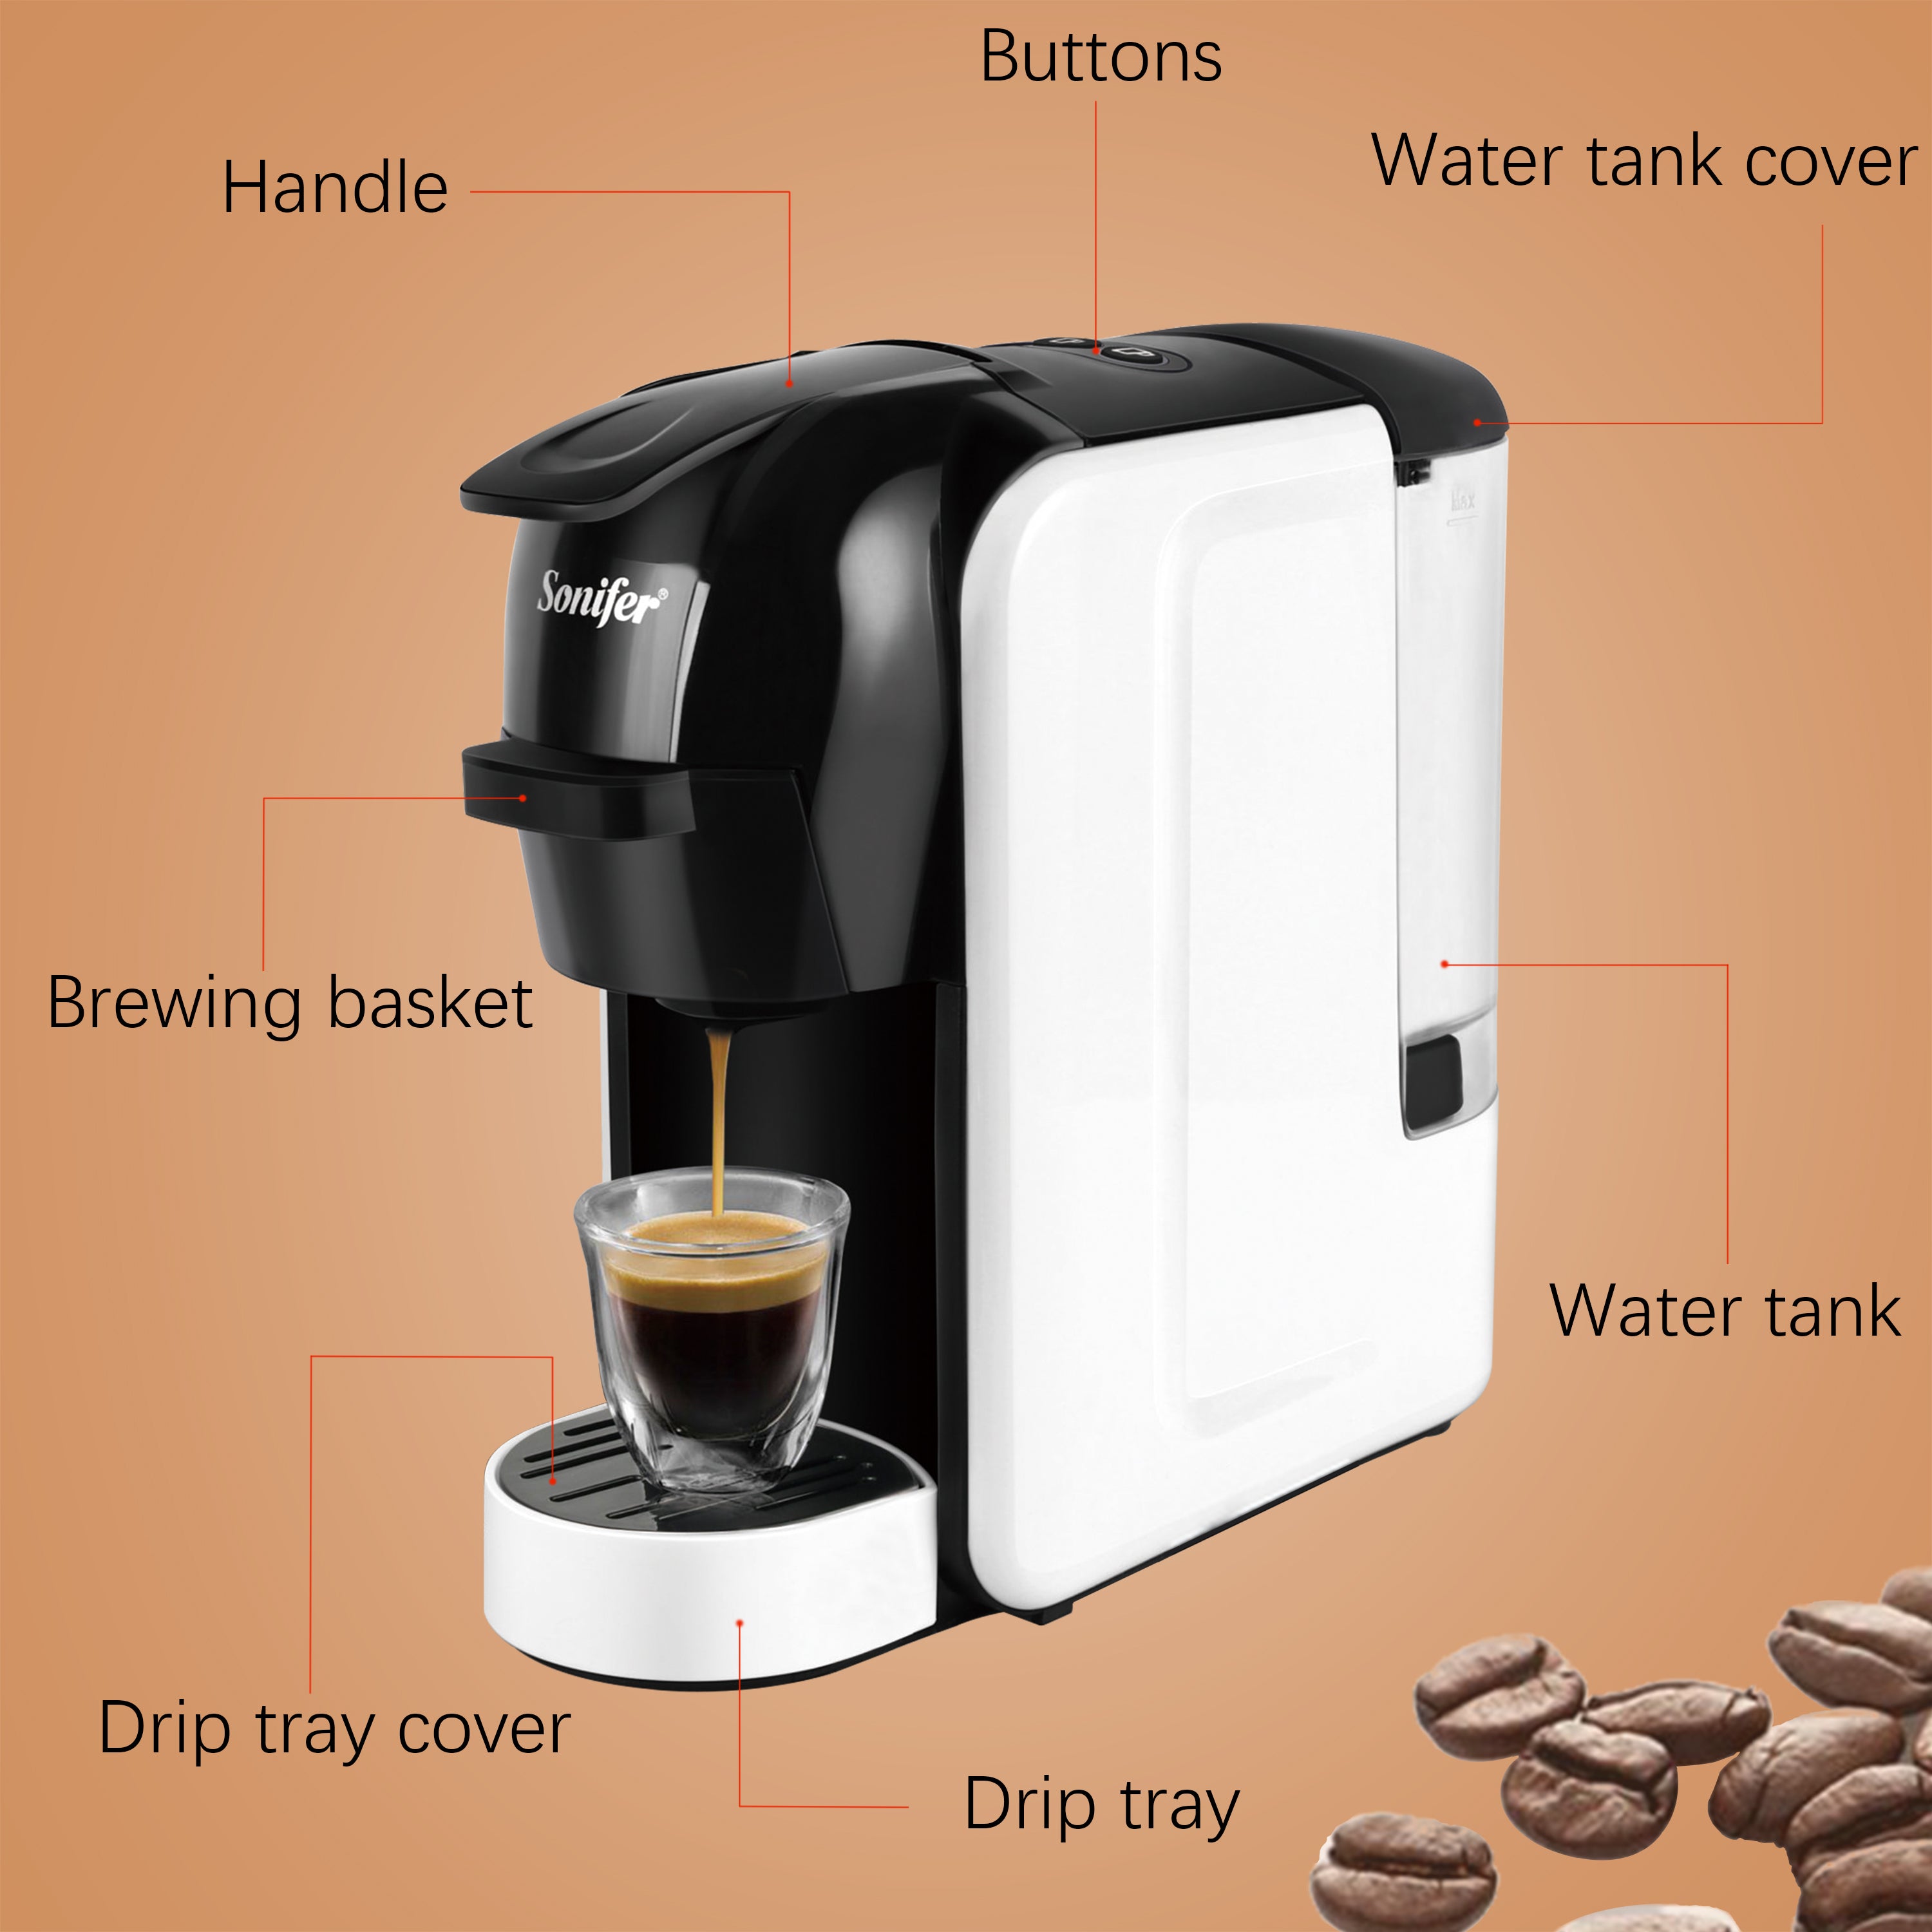 Sonifer Coffee Maker European Electric Coffee Pot Coffee Machine